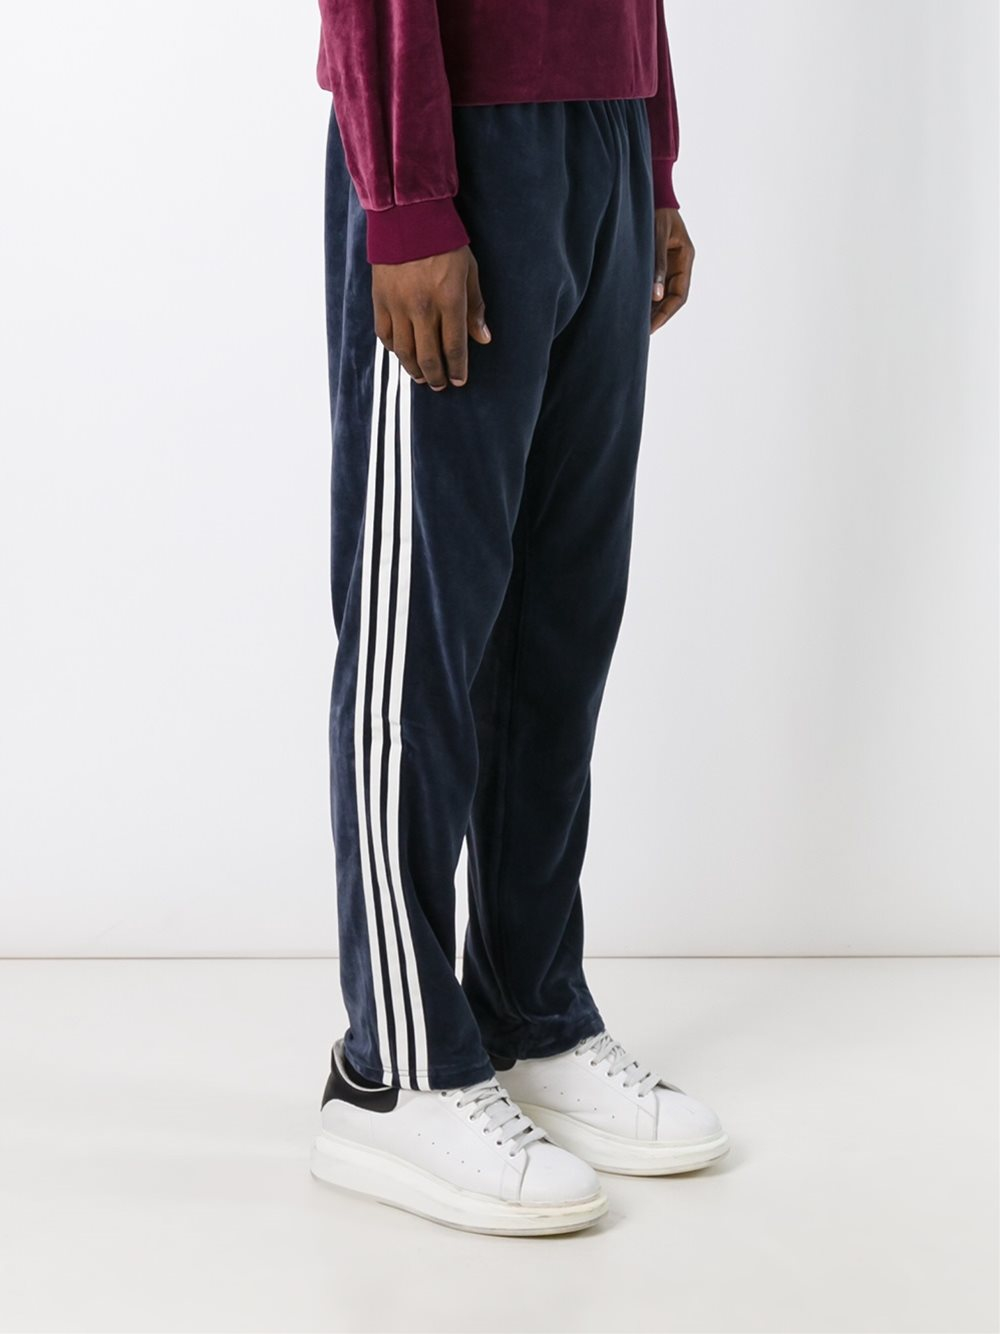 Lyst - Adidas Originals Velour Track Pants in Blue for Men